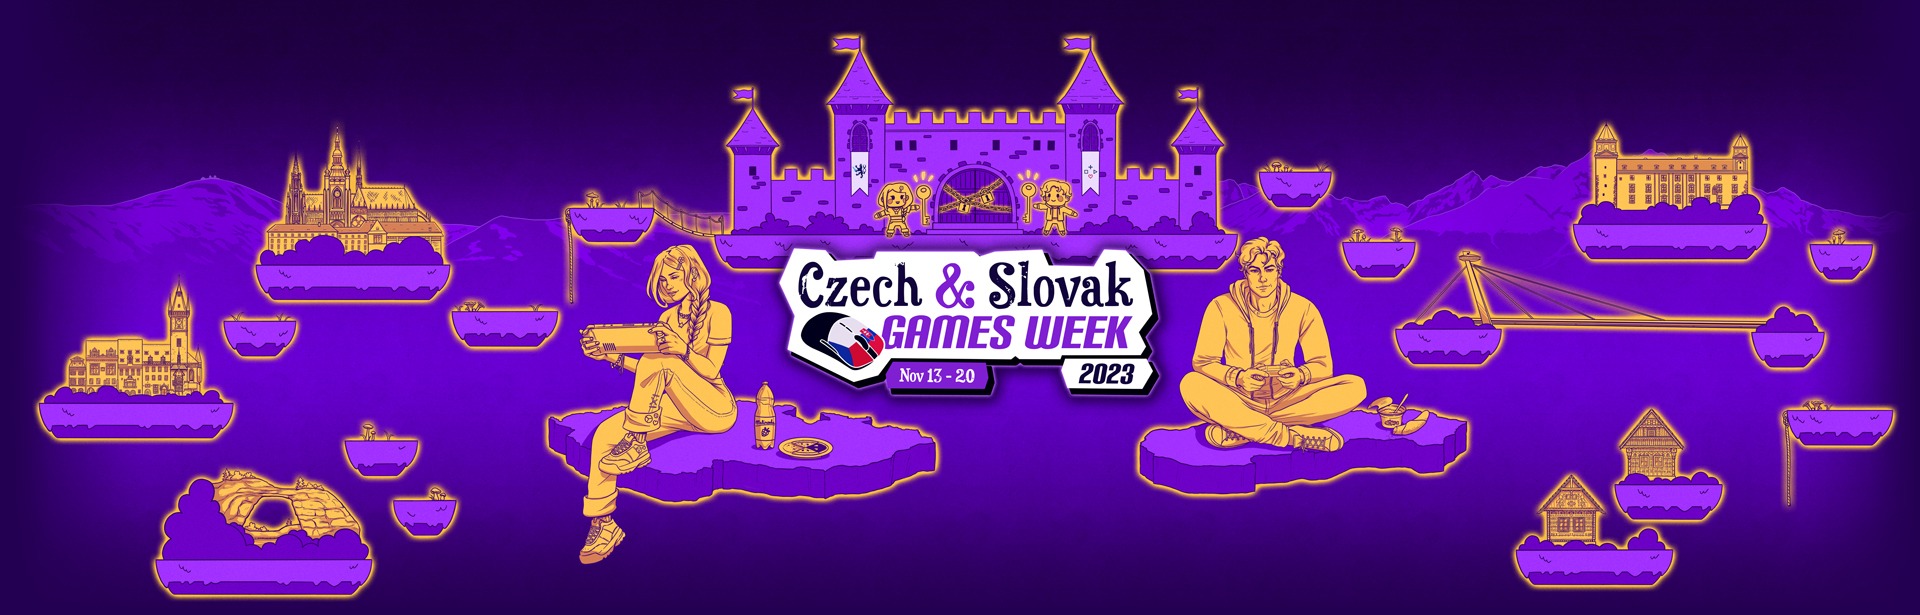 Avi Duda on LinkedIn: Czech & Slovak Games Week - Czech & Slovak Games Week  2022 - Steam News